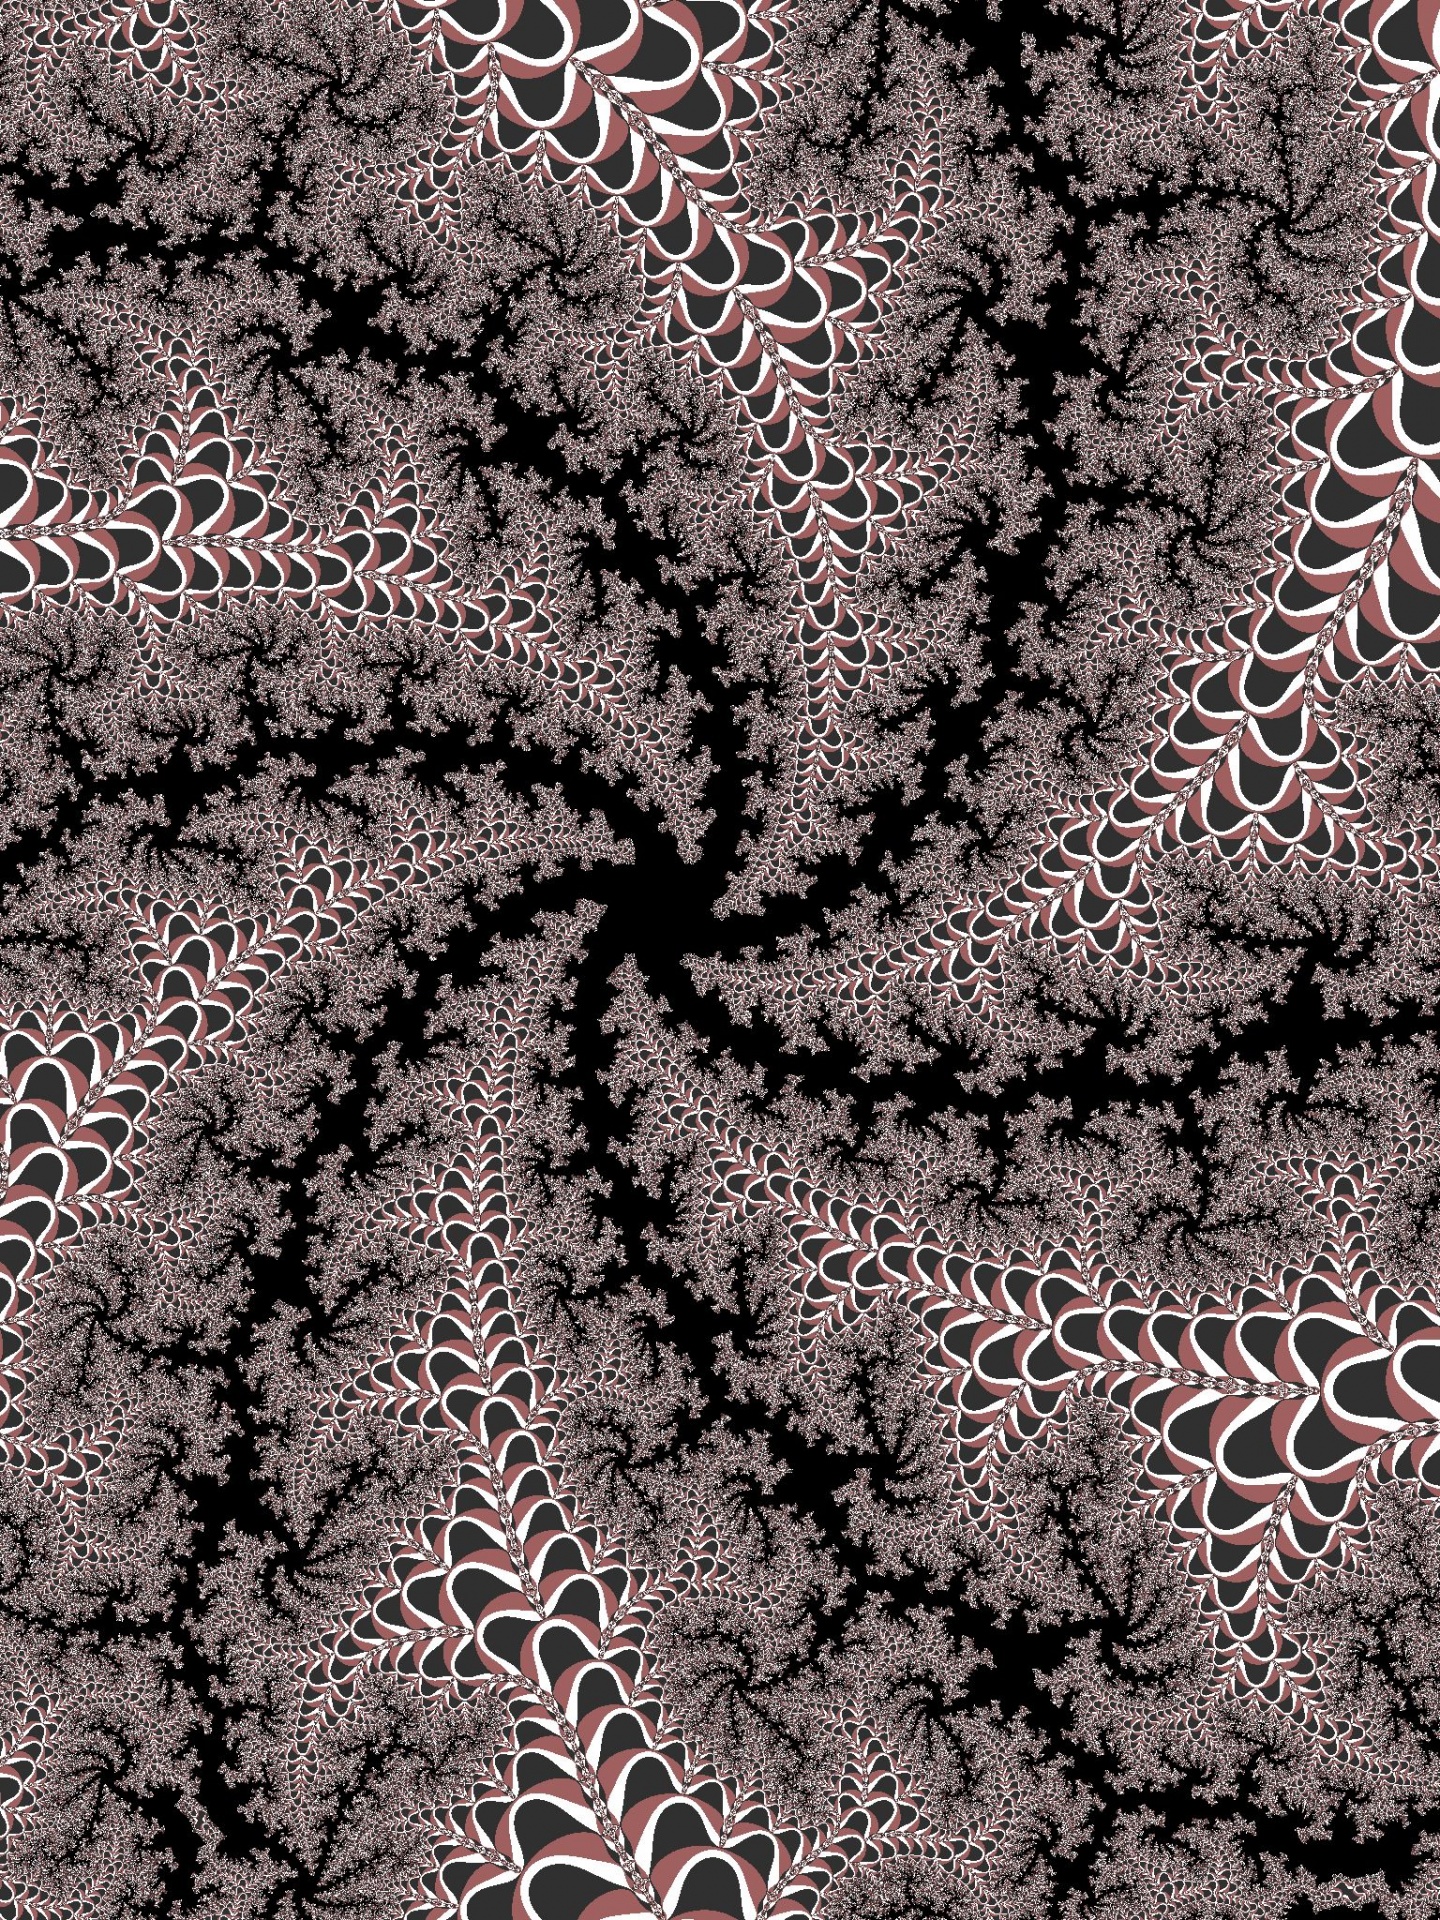 Bruine fractal spiraal